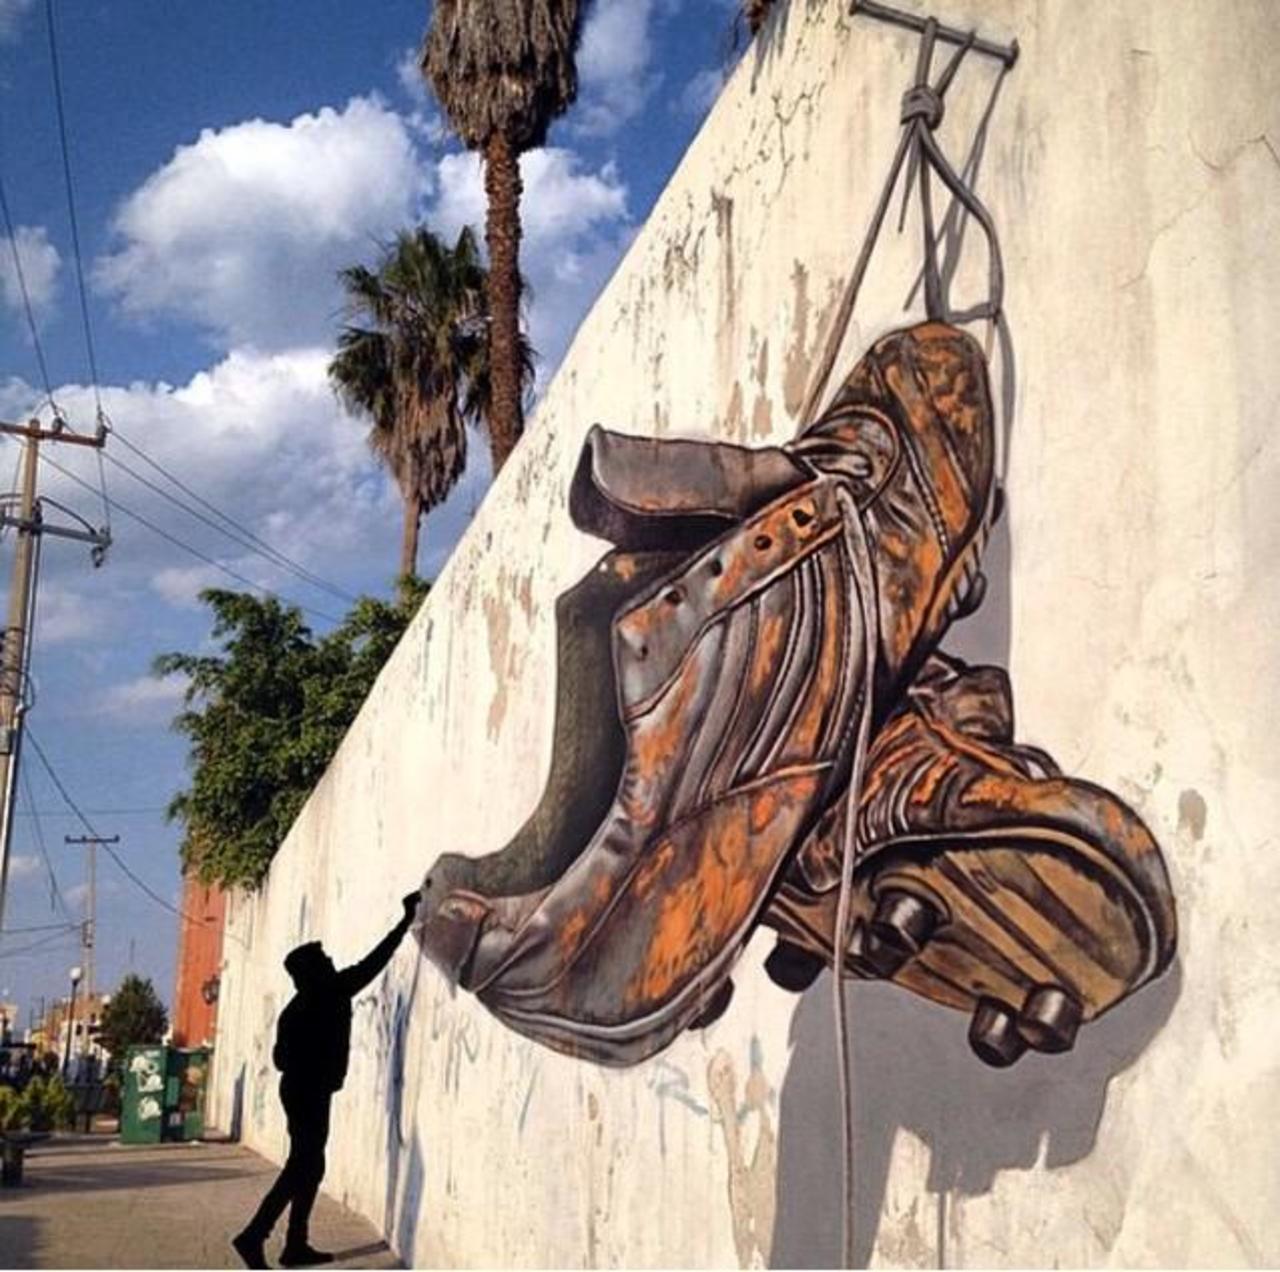 Awesome anamorphic 3D Street Art by Juandres Vera 

#art #graffiti #mural #streetart http://t.co/CpWgUYi6VF